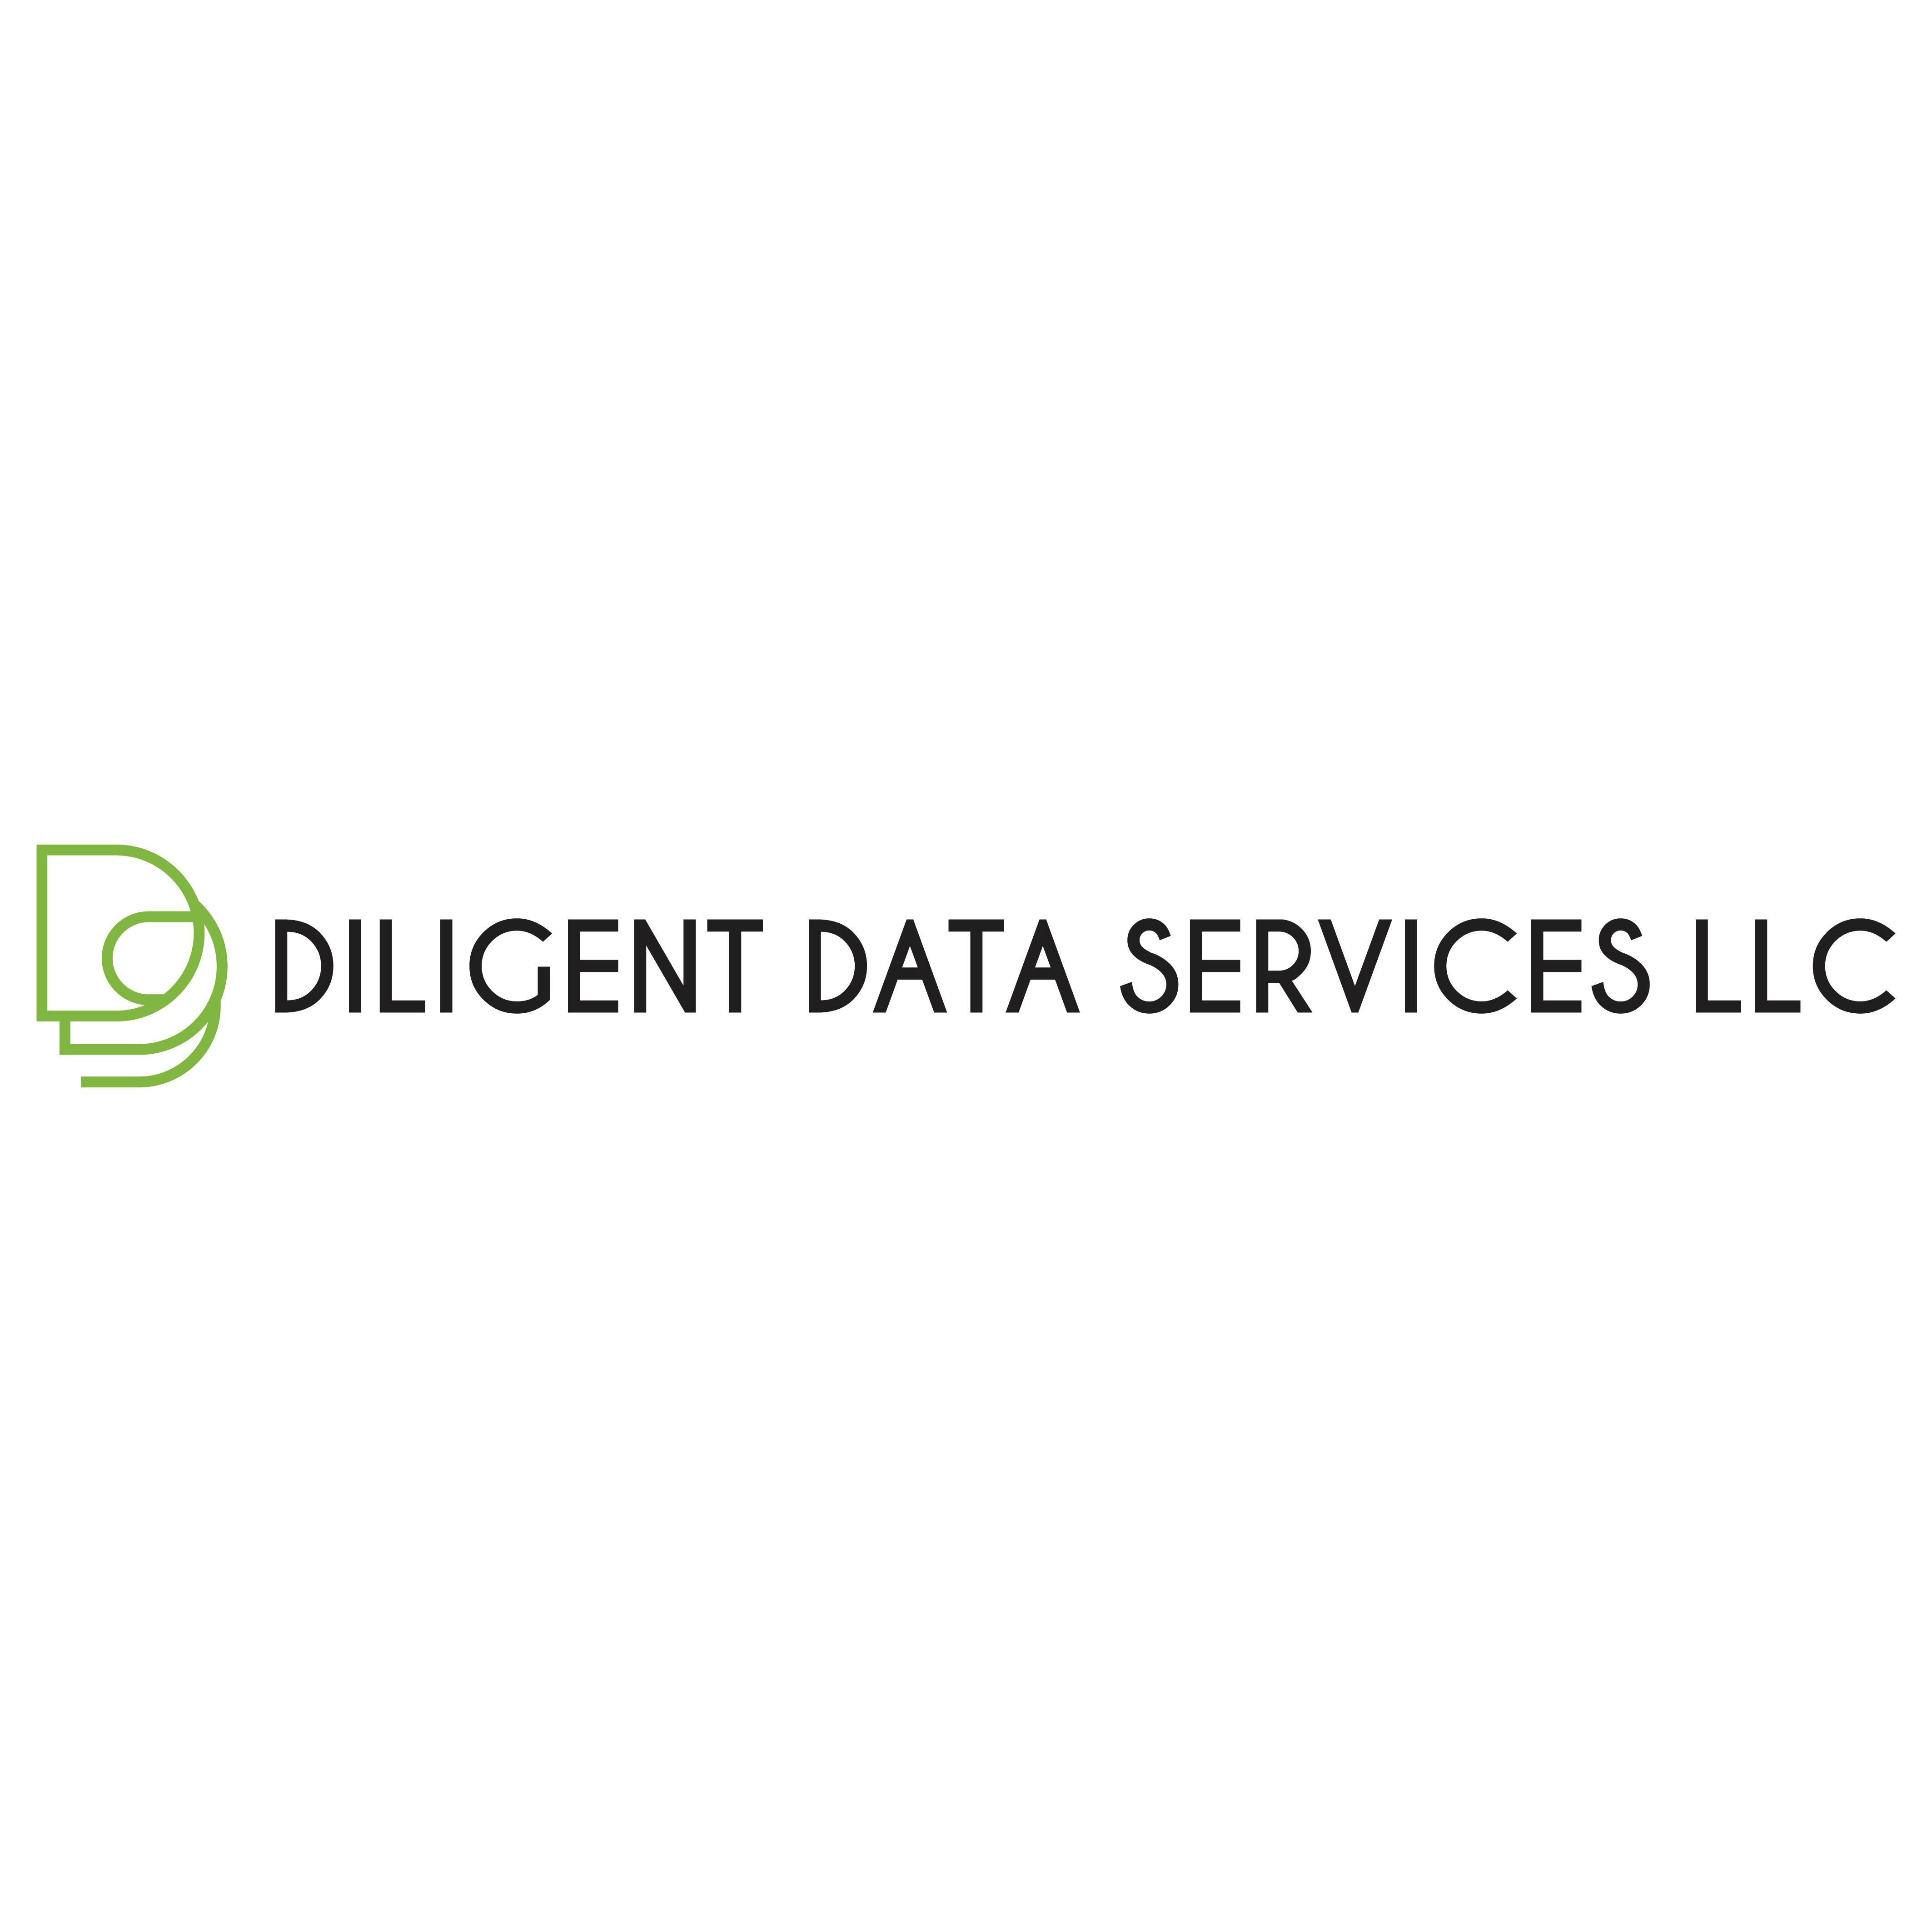 Diligent Data Services, LLC